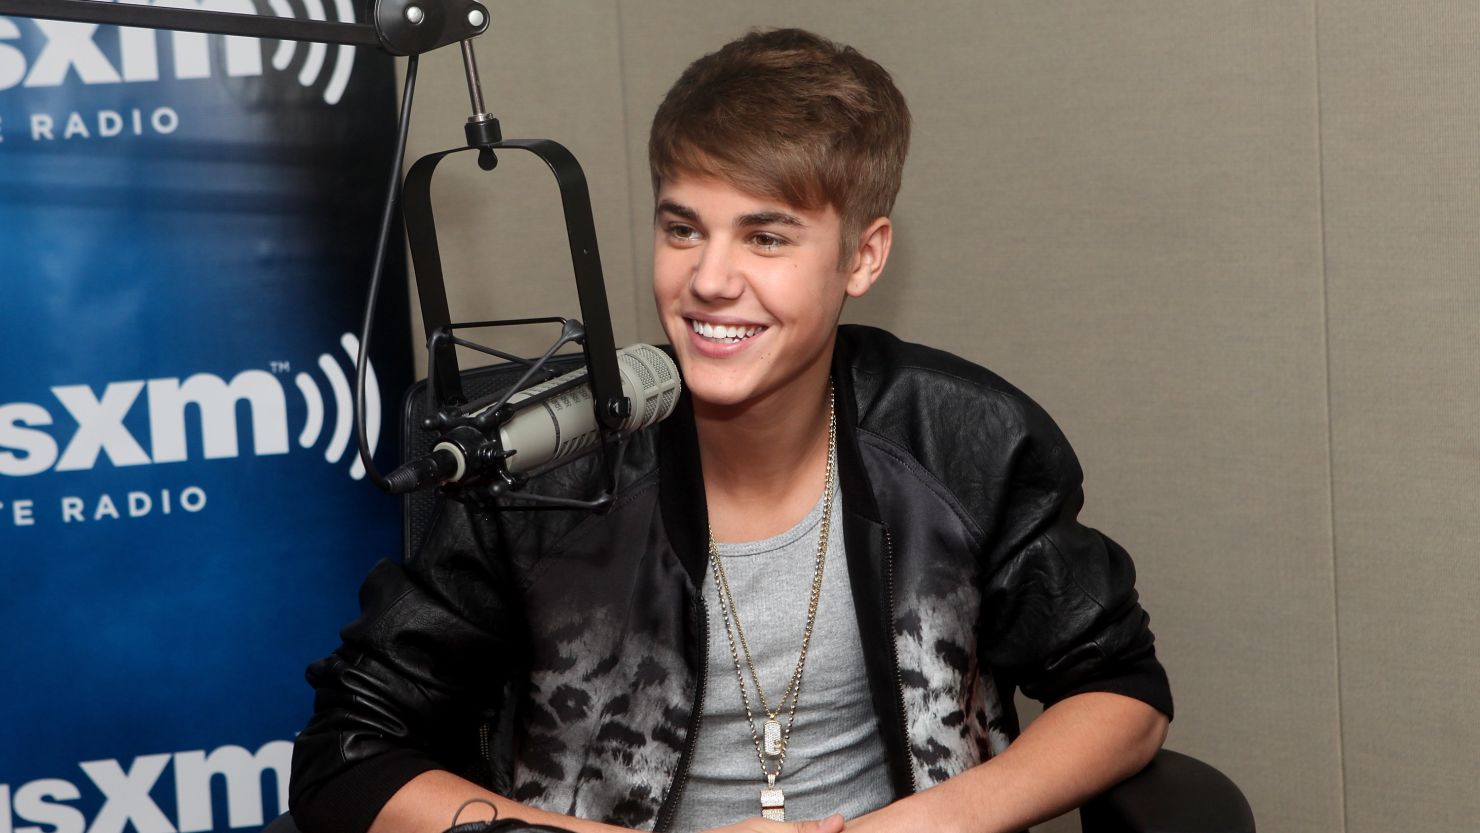 Justin Bieber premieres new album, "Believe," on SiriusXM Hits 1 in New York City.